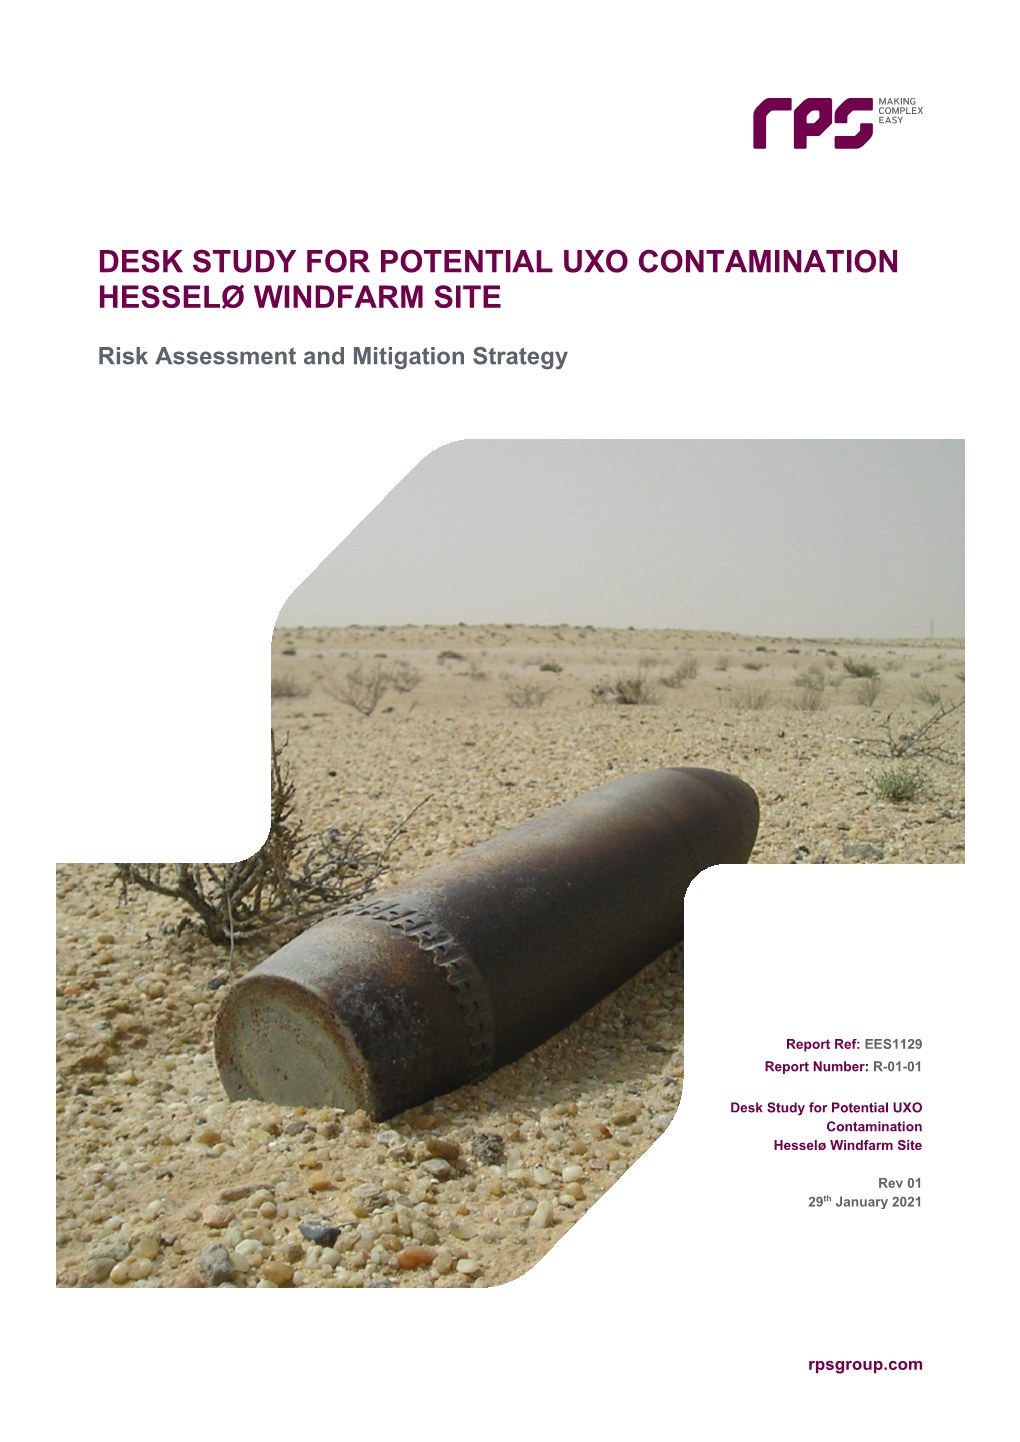 Desk Study for Potential Uxo Contamination Hesselø Windfarm Site